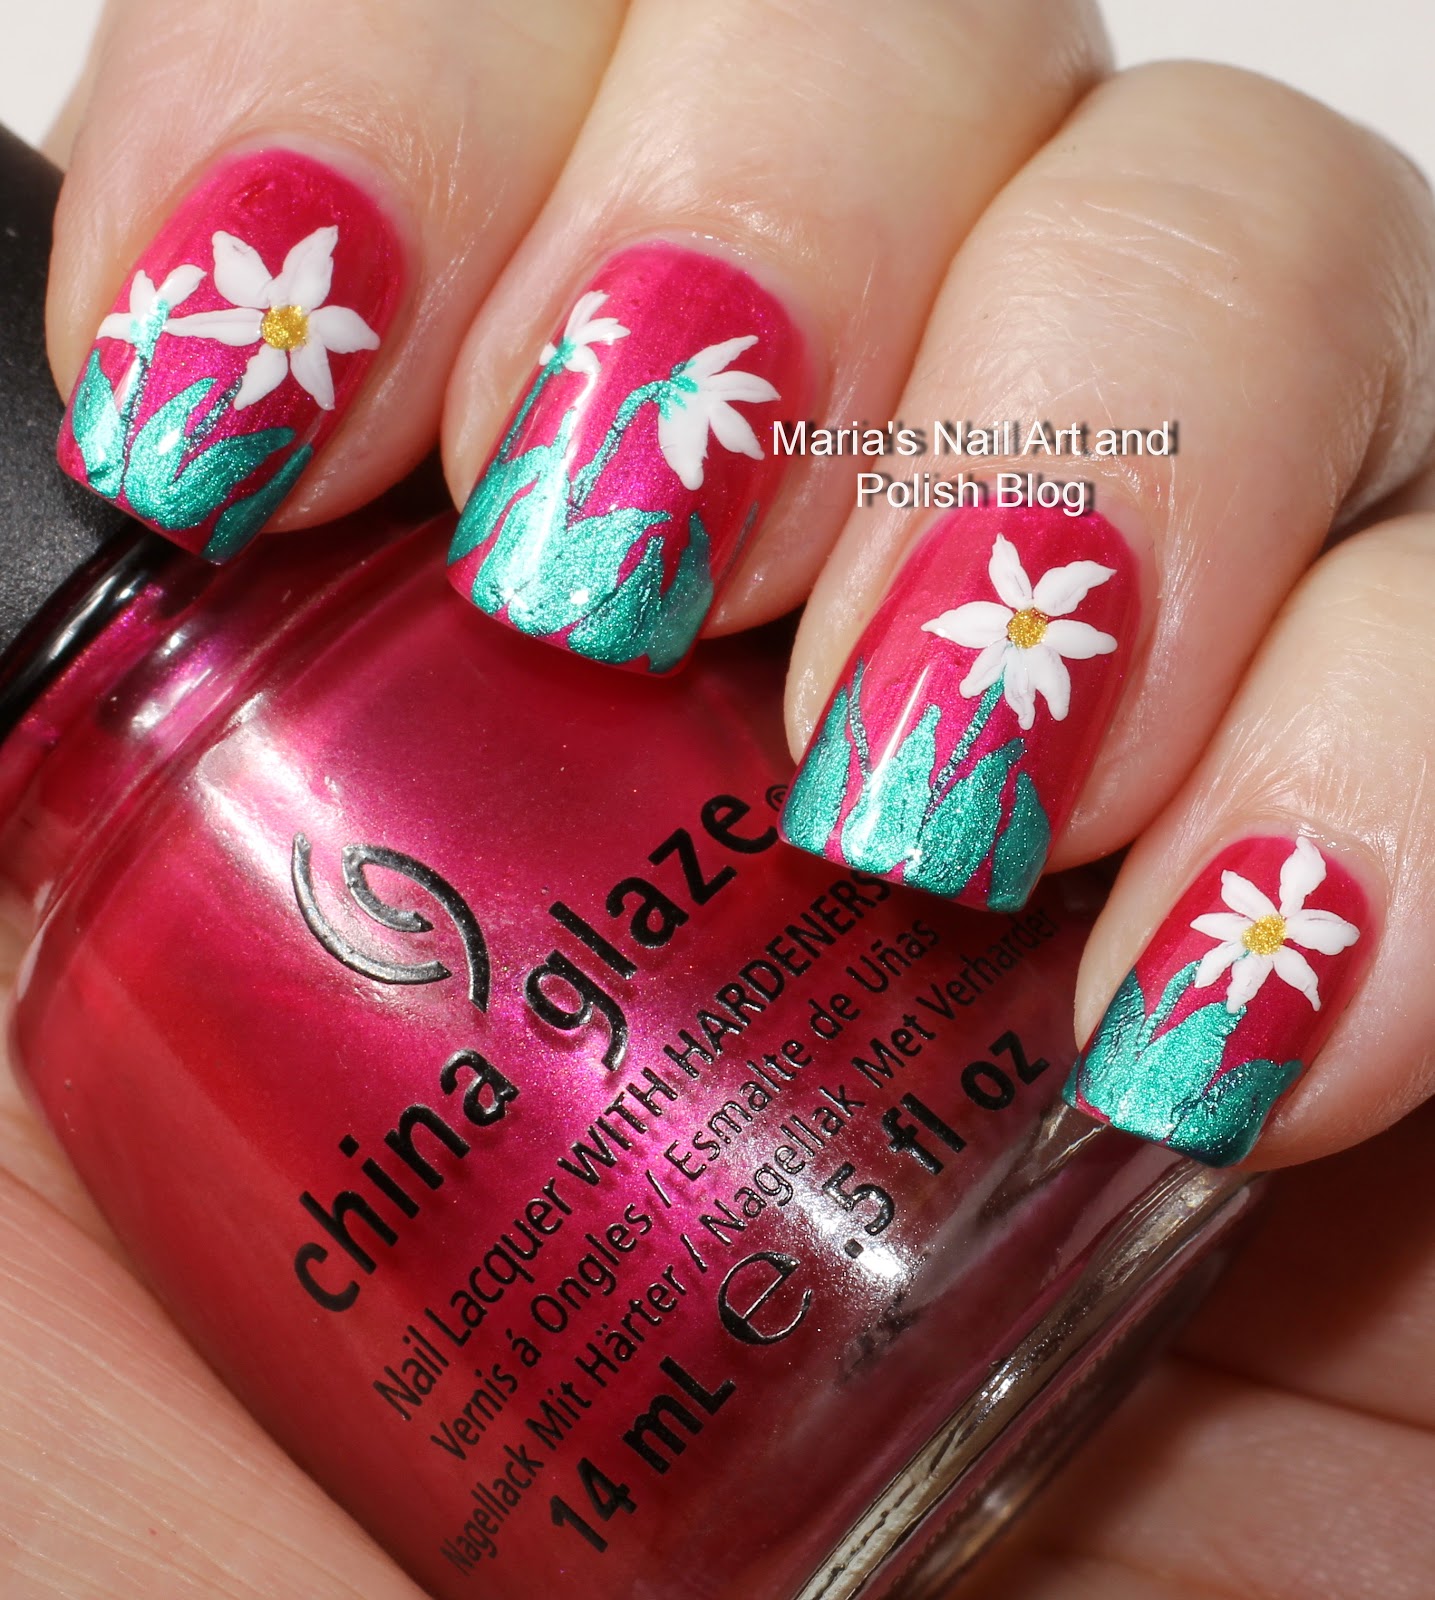 Marias Nail Art and Polish Blog: Large floral nail art as a farewell to ...